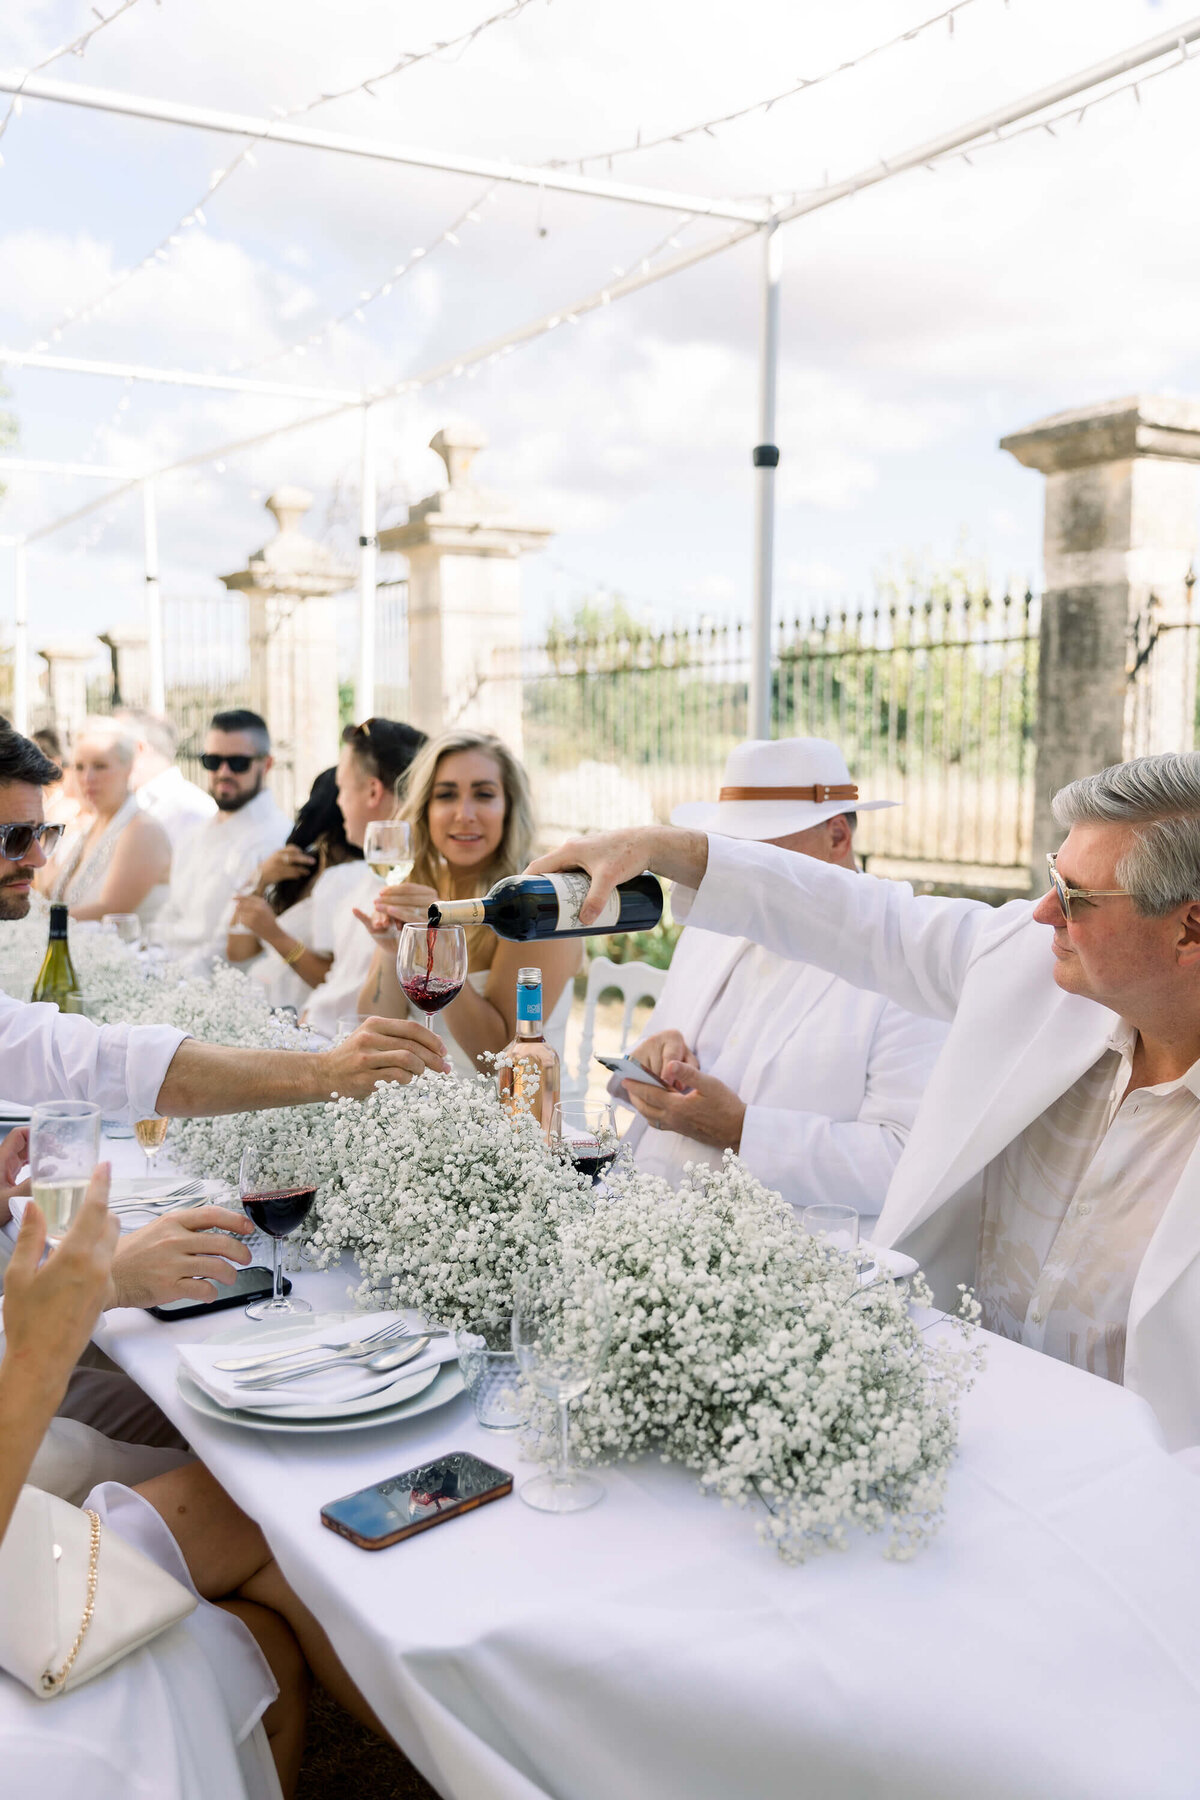 Victoria Engelen Flowers - A White Wedding in a French Chateau - JoannaandMattWedding_DariaLormanPhotography-1284